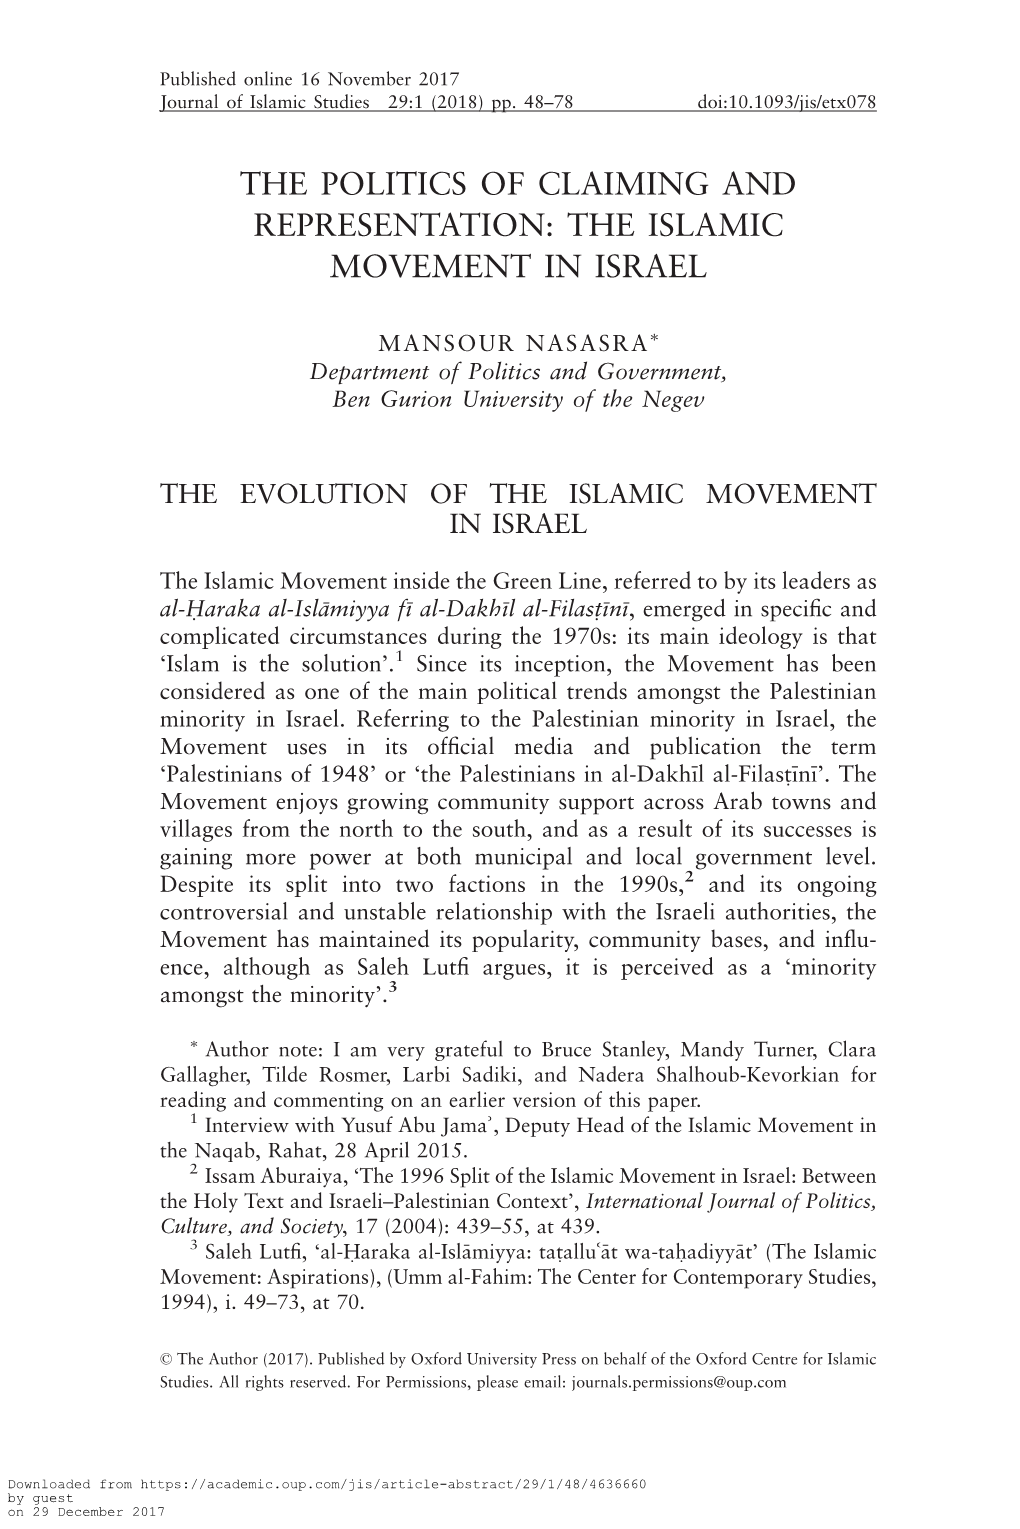 The Islamic Movement in Israel